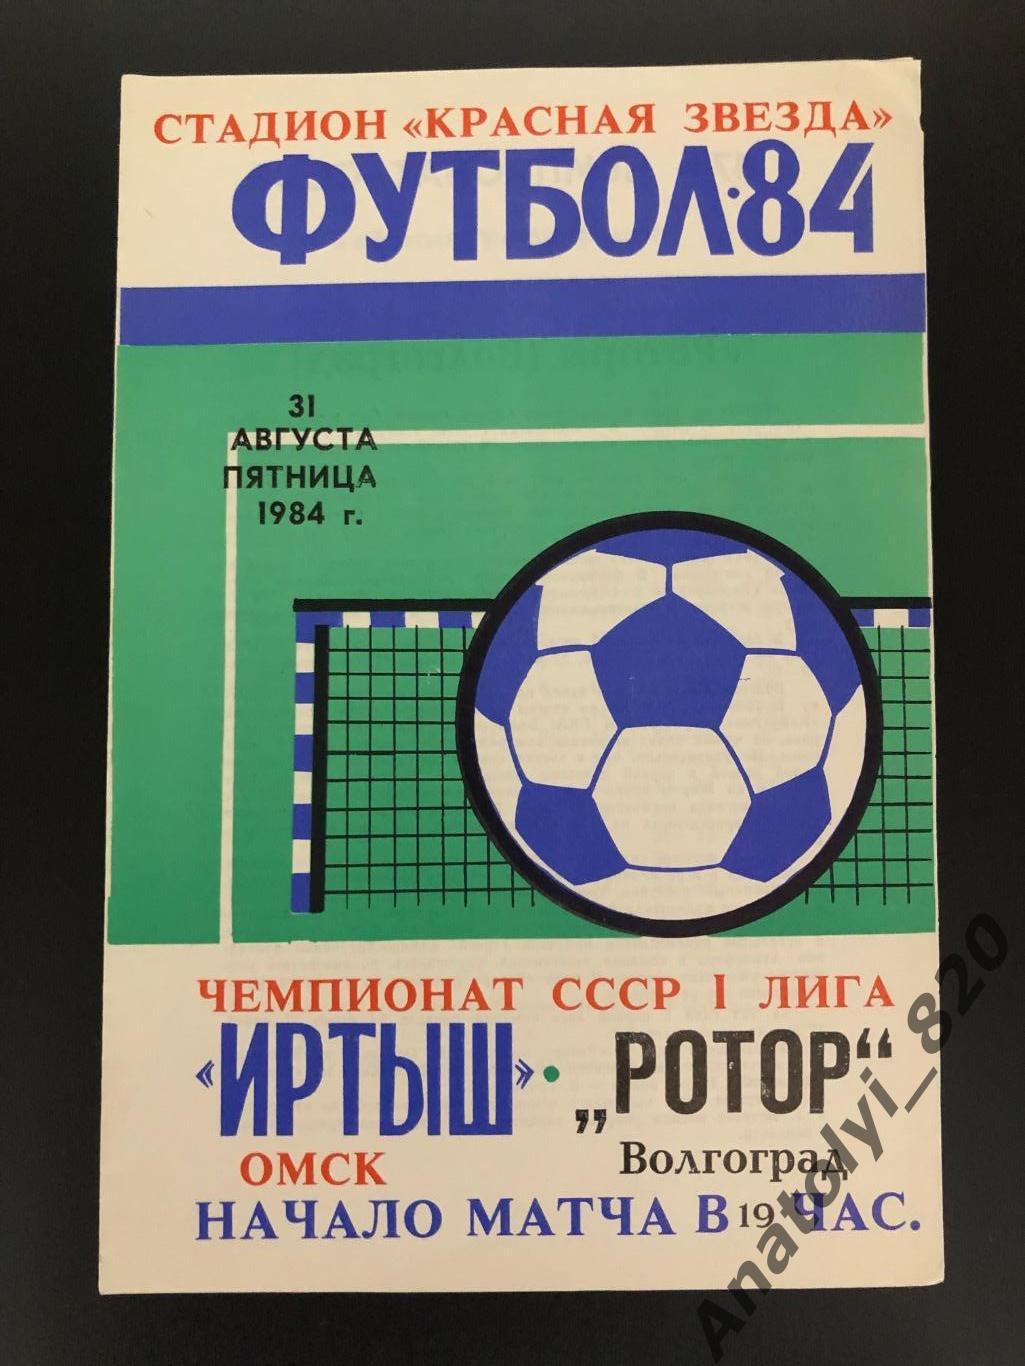 Иртыш Омск - Ротор Волгоград, 31.08.1984